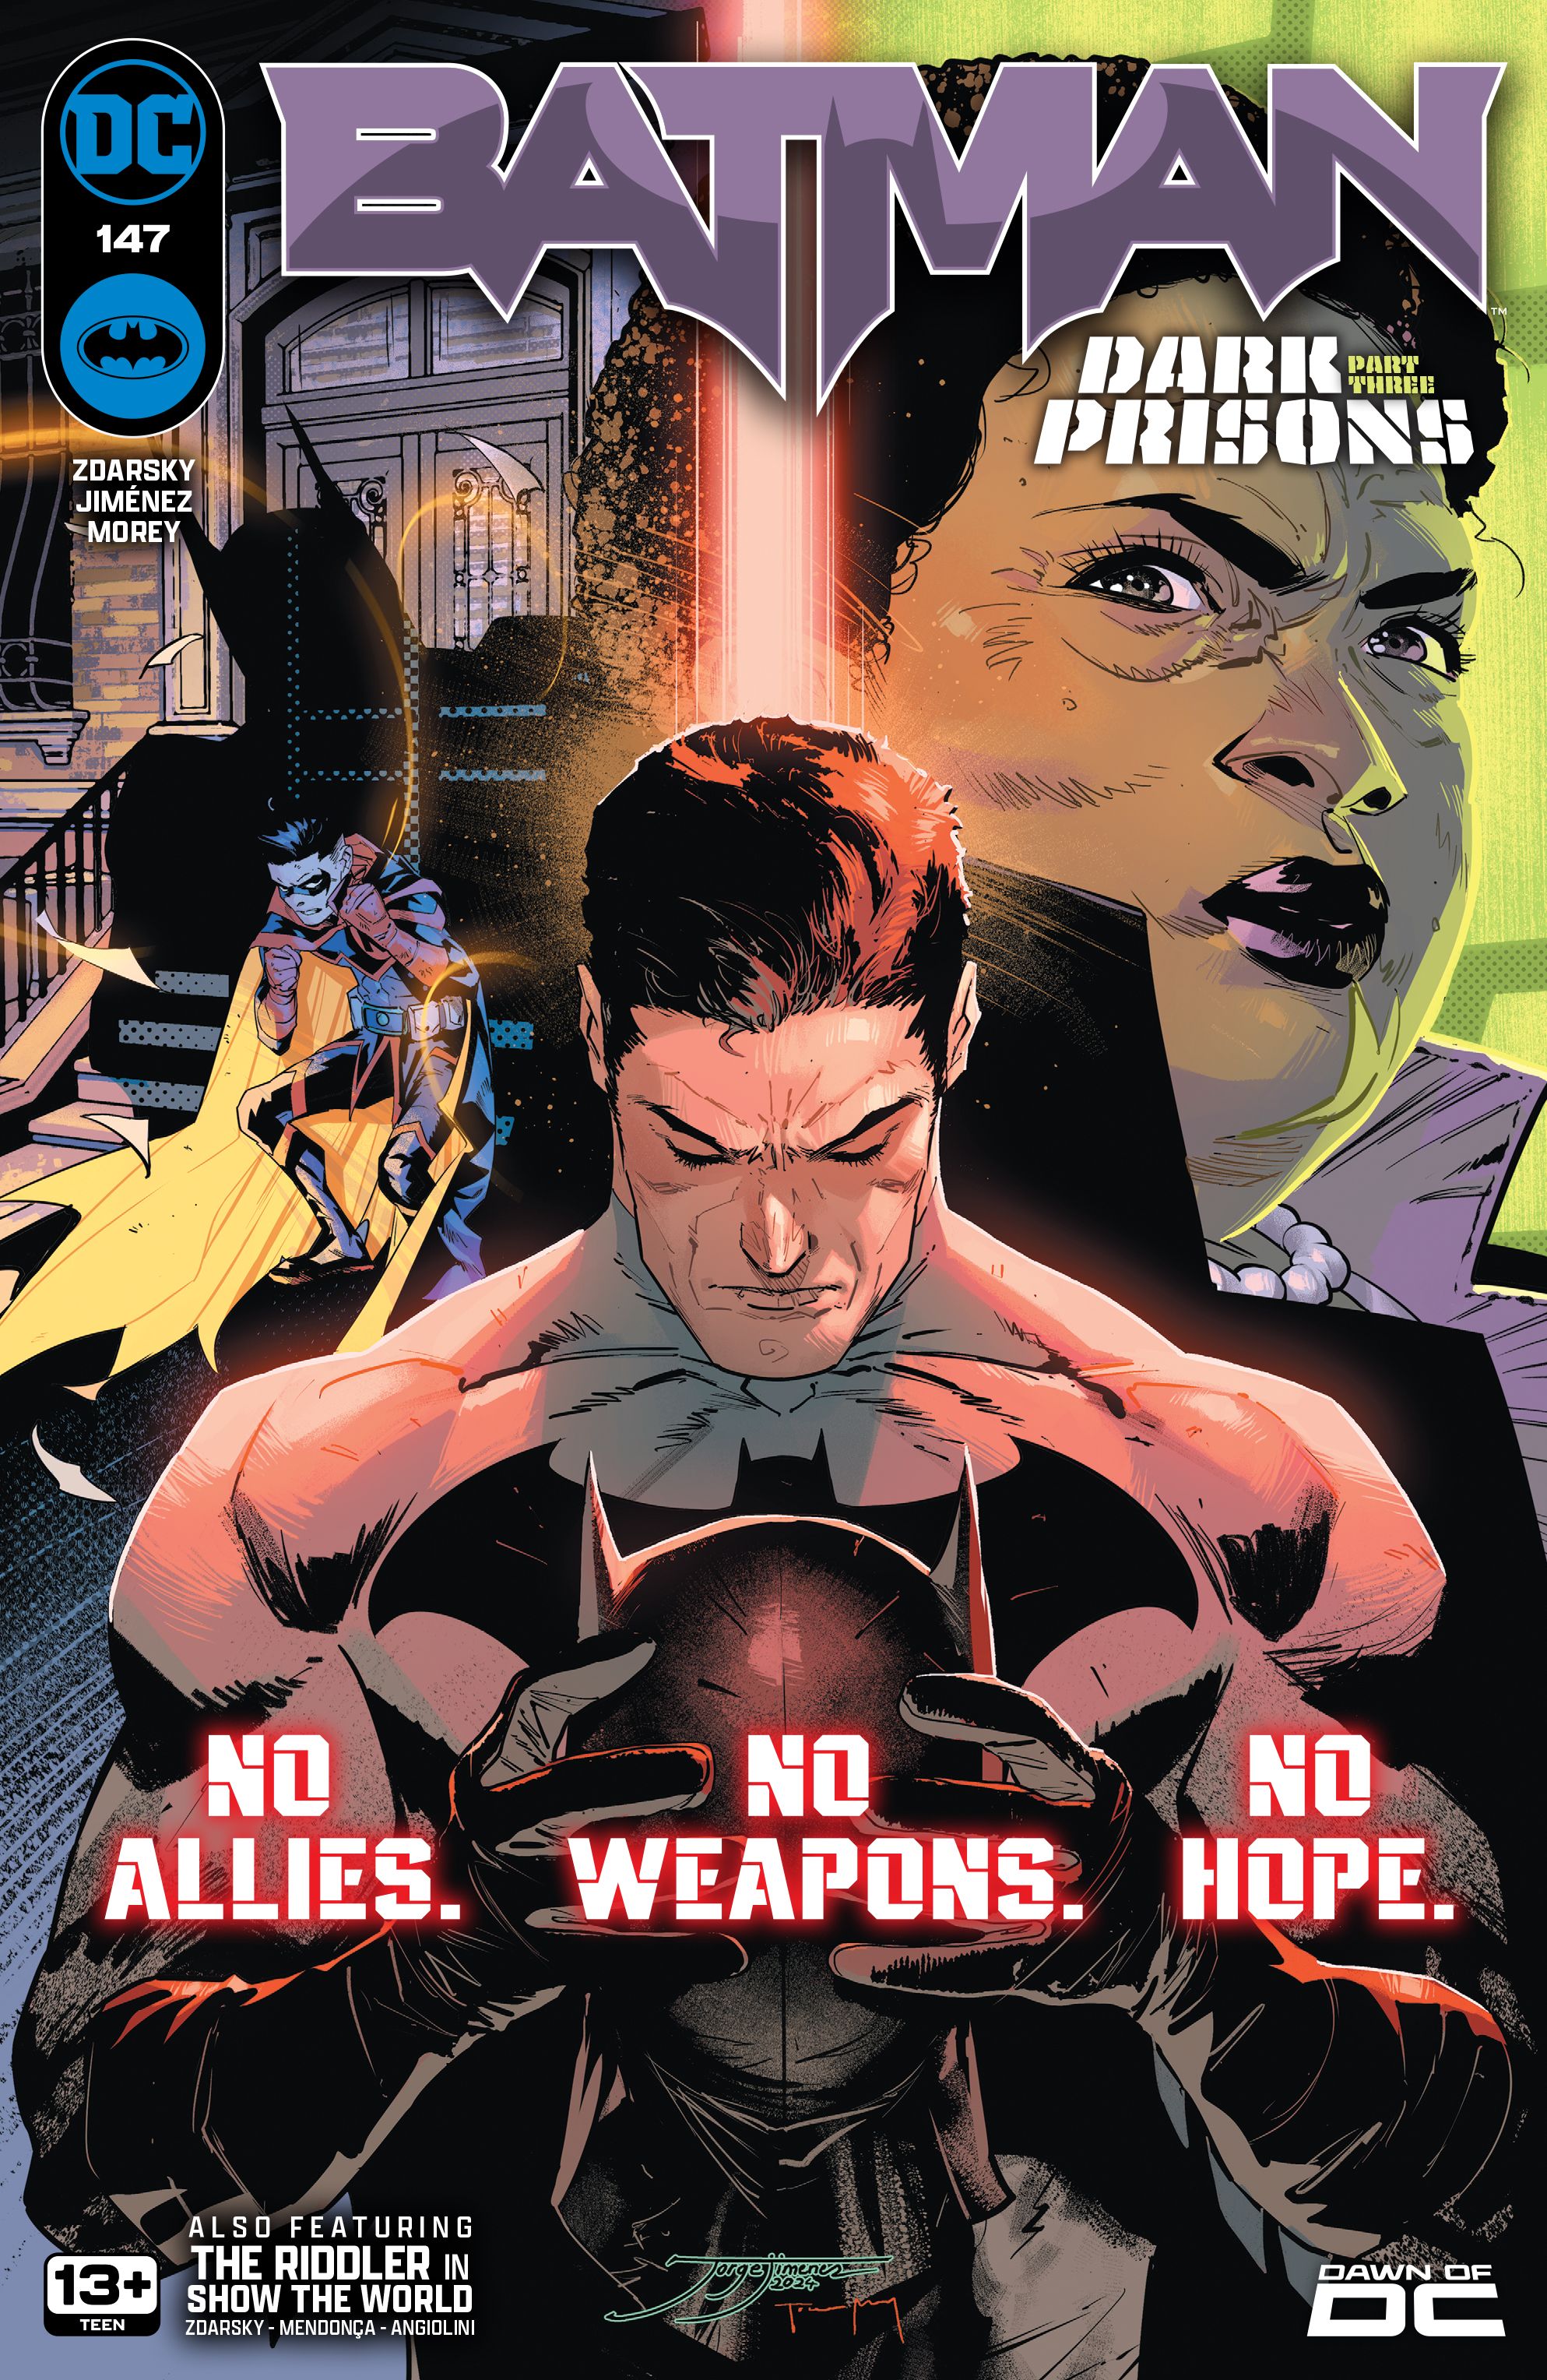 Capa principal do Batman # 147: Bruce segura seu capuz do Batman na frente de outras imagens de Robin Damian Wayne e Amanda Waller.